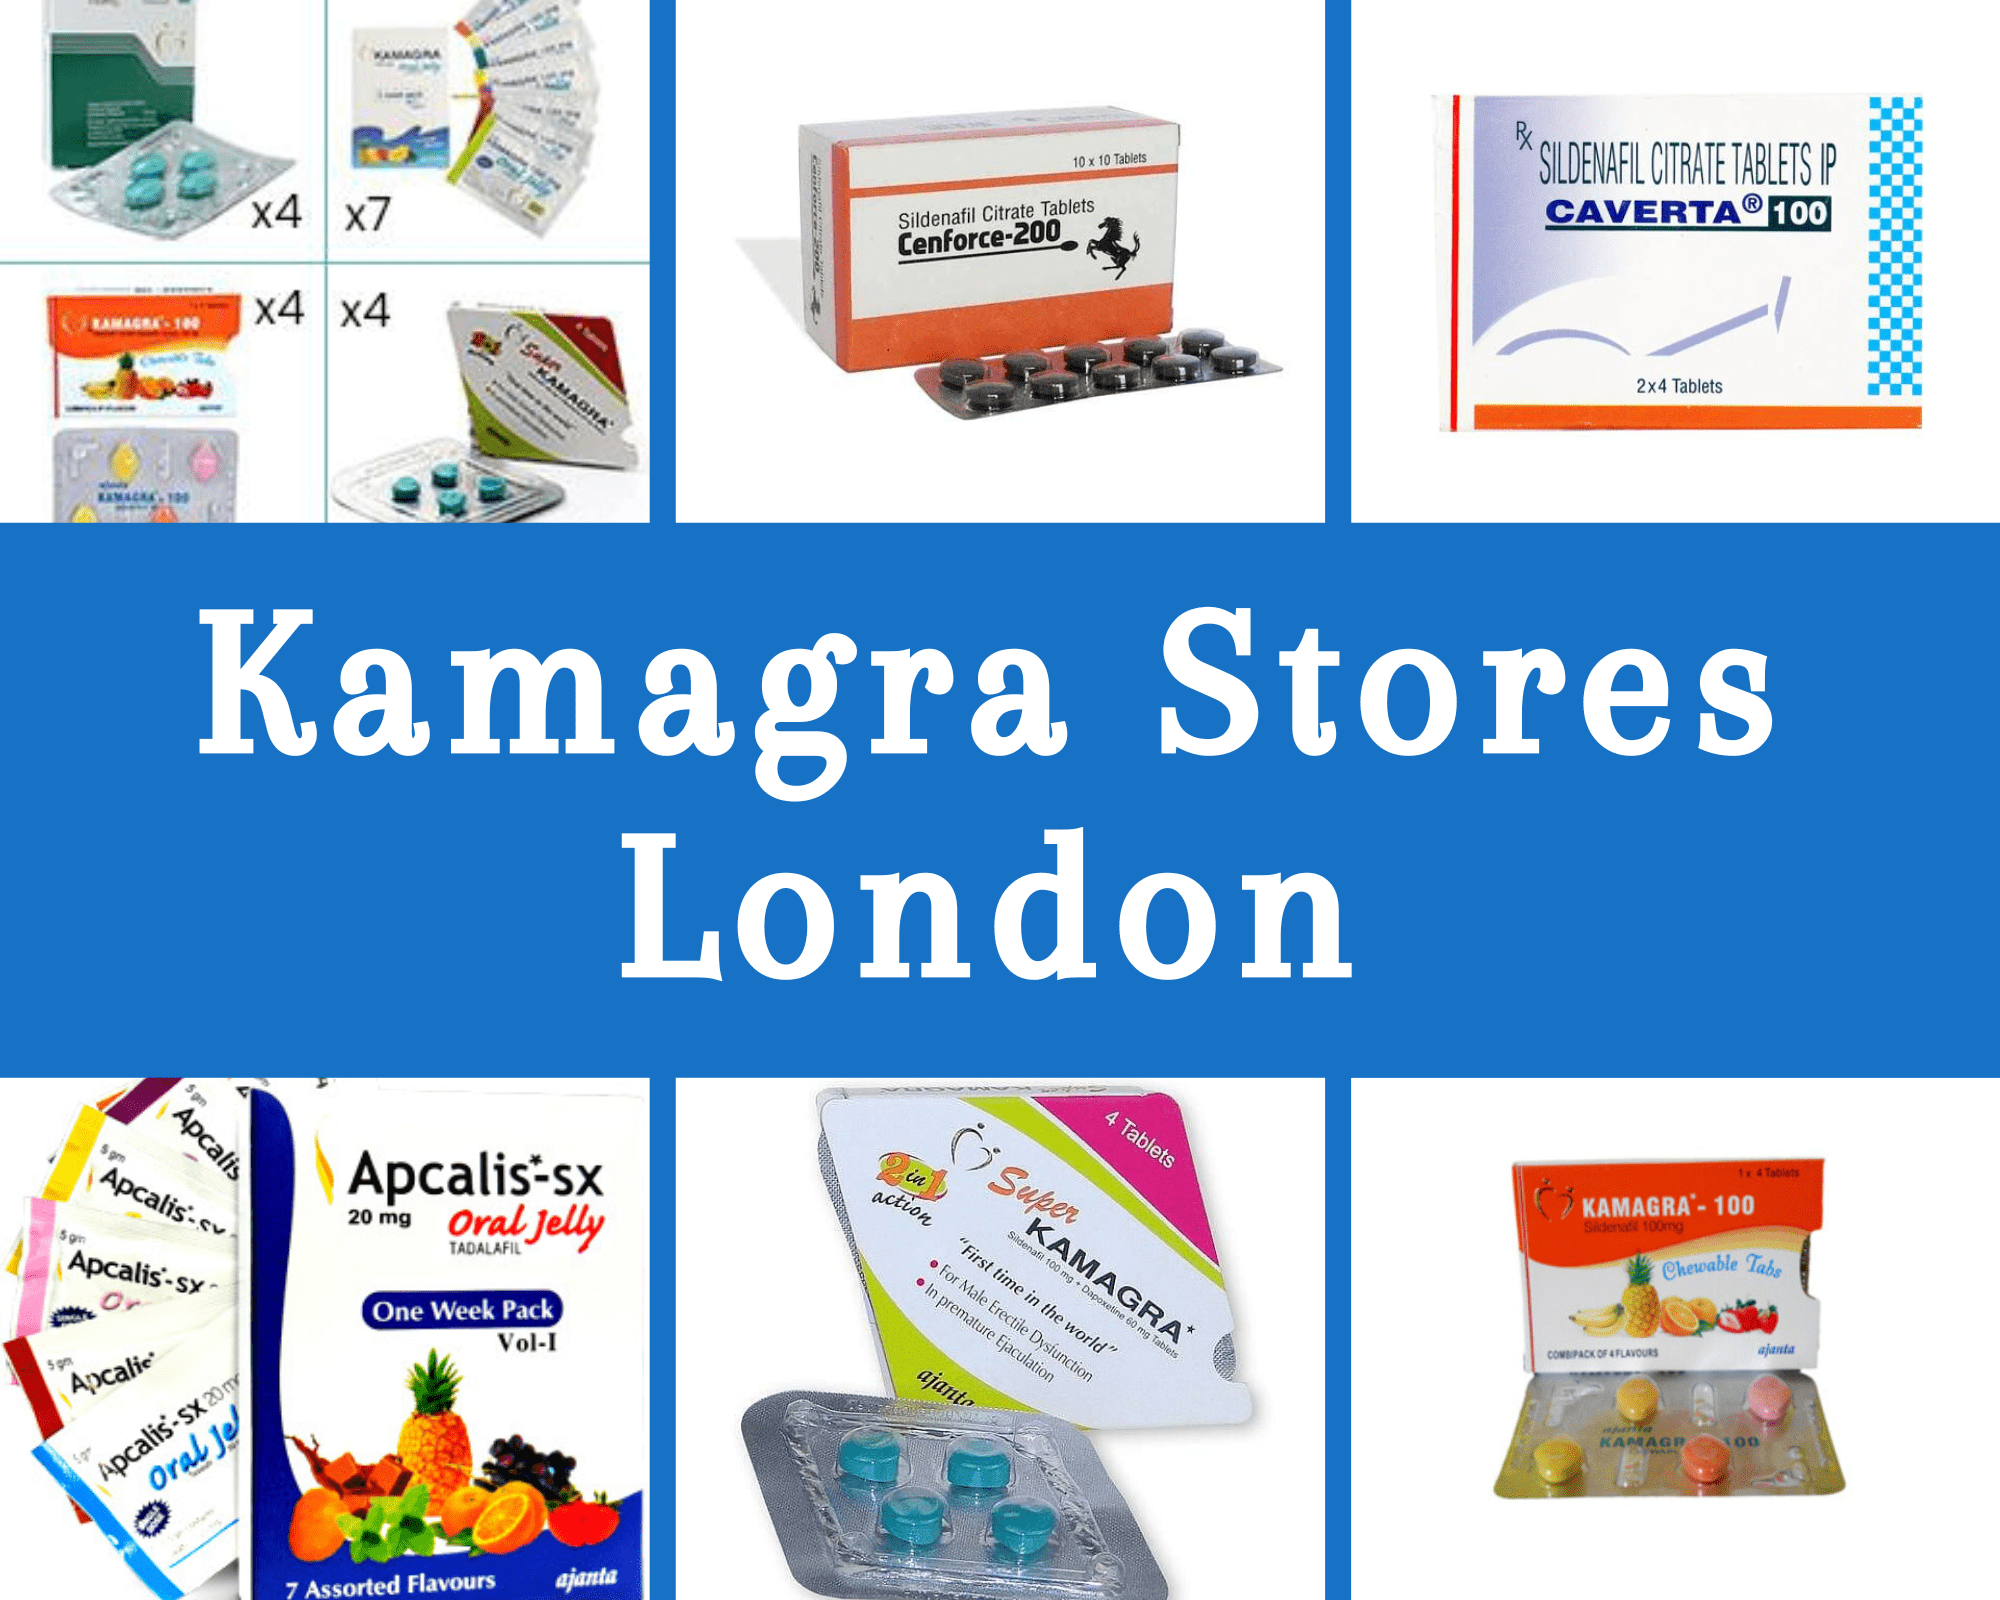 Kamagra stores London 3